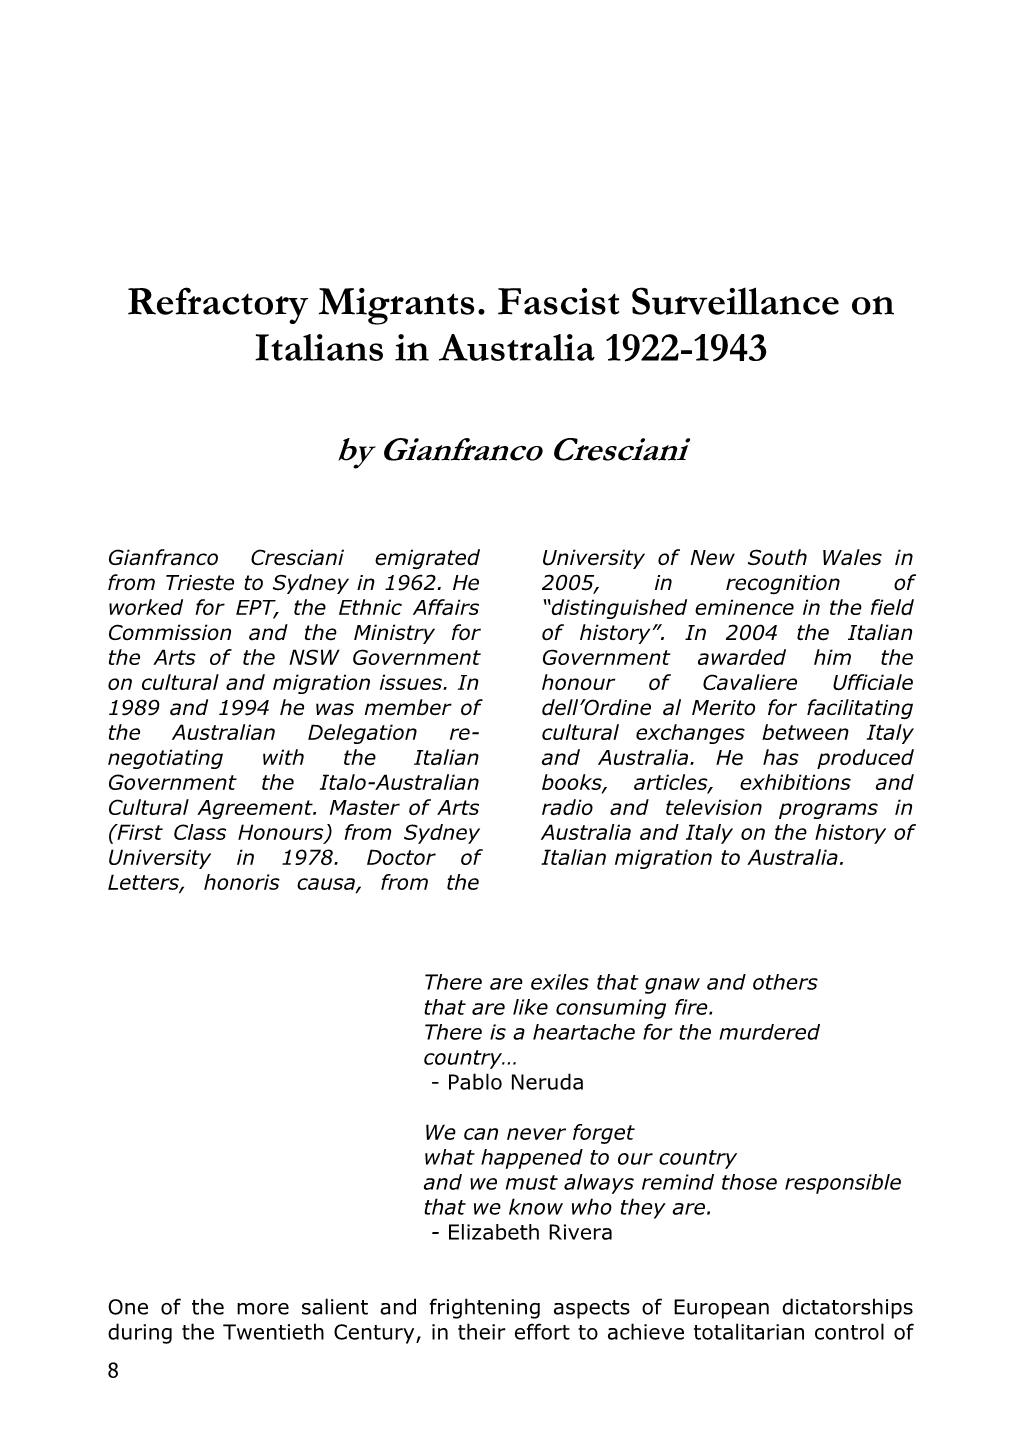 Refractory Migrants. Fascist Surveillance on Italians in Australia 1922-1943